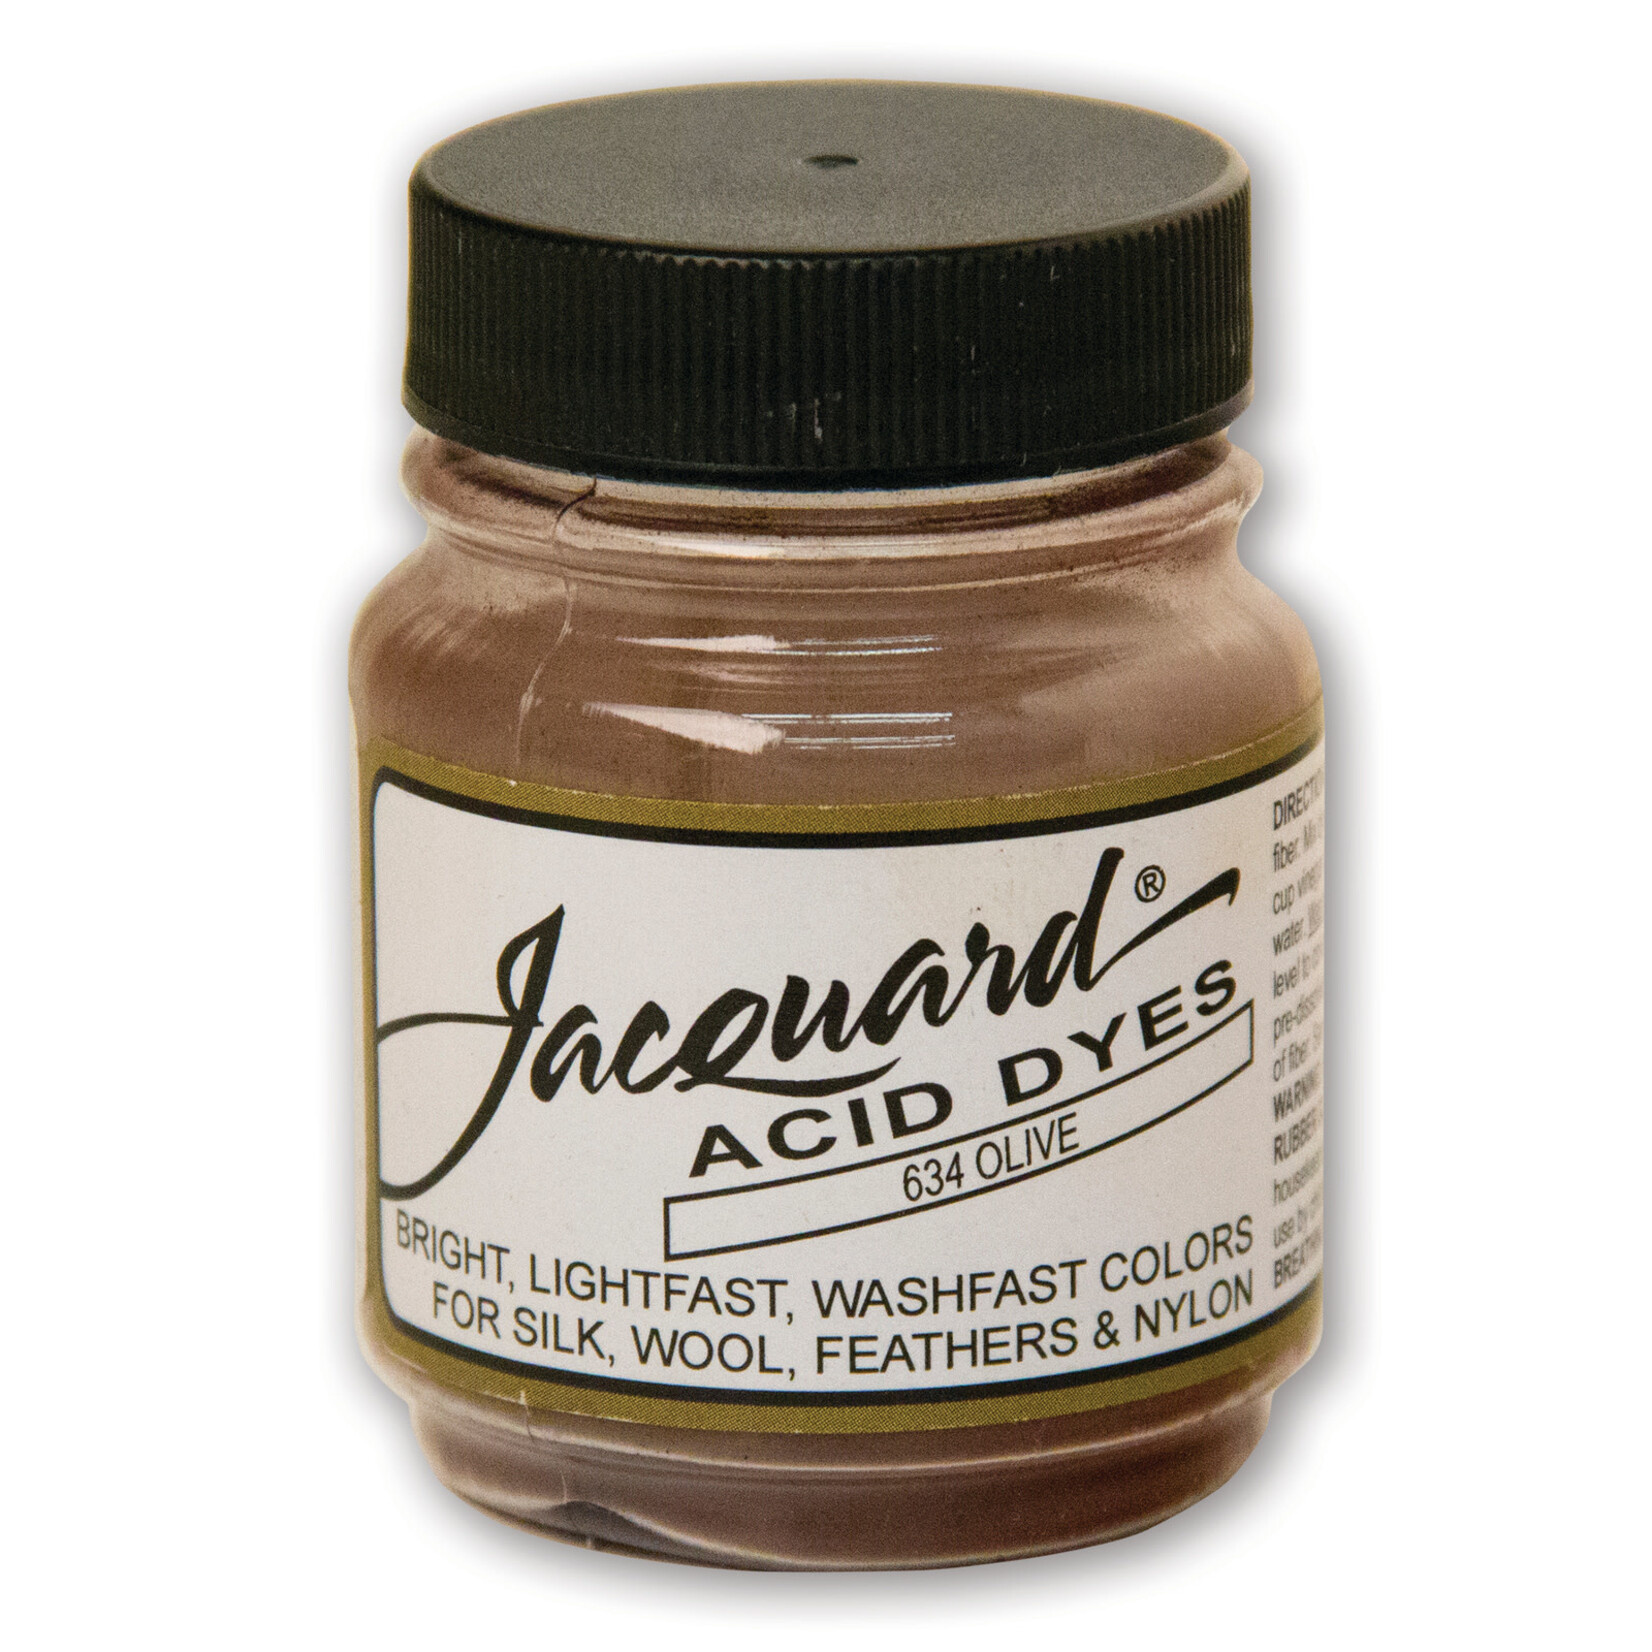 Jacquard Acid Dye .5 Oz Olive